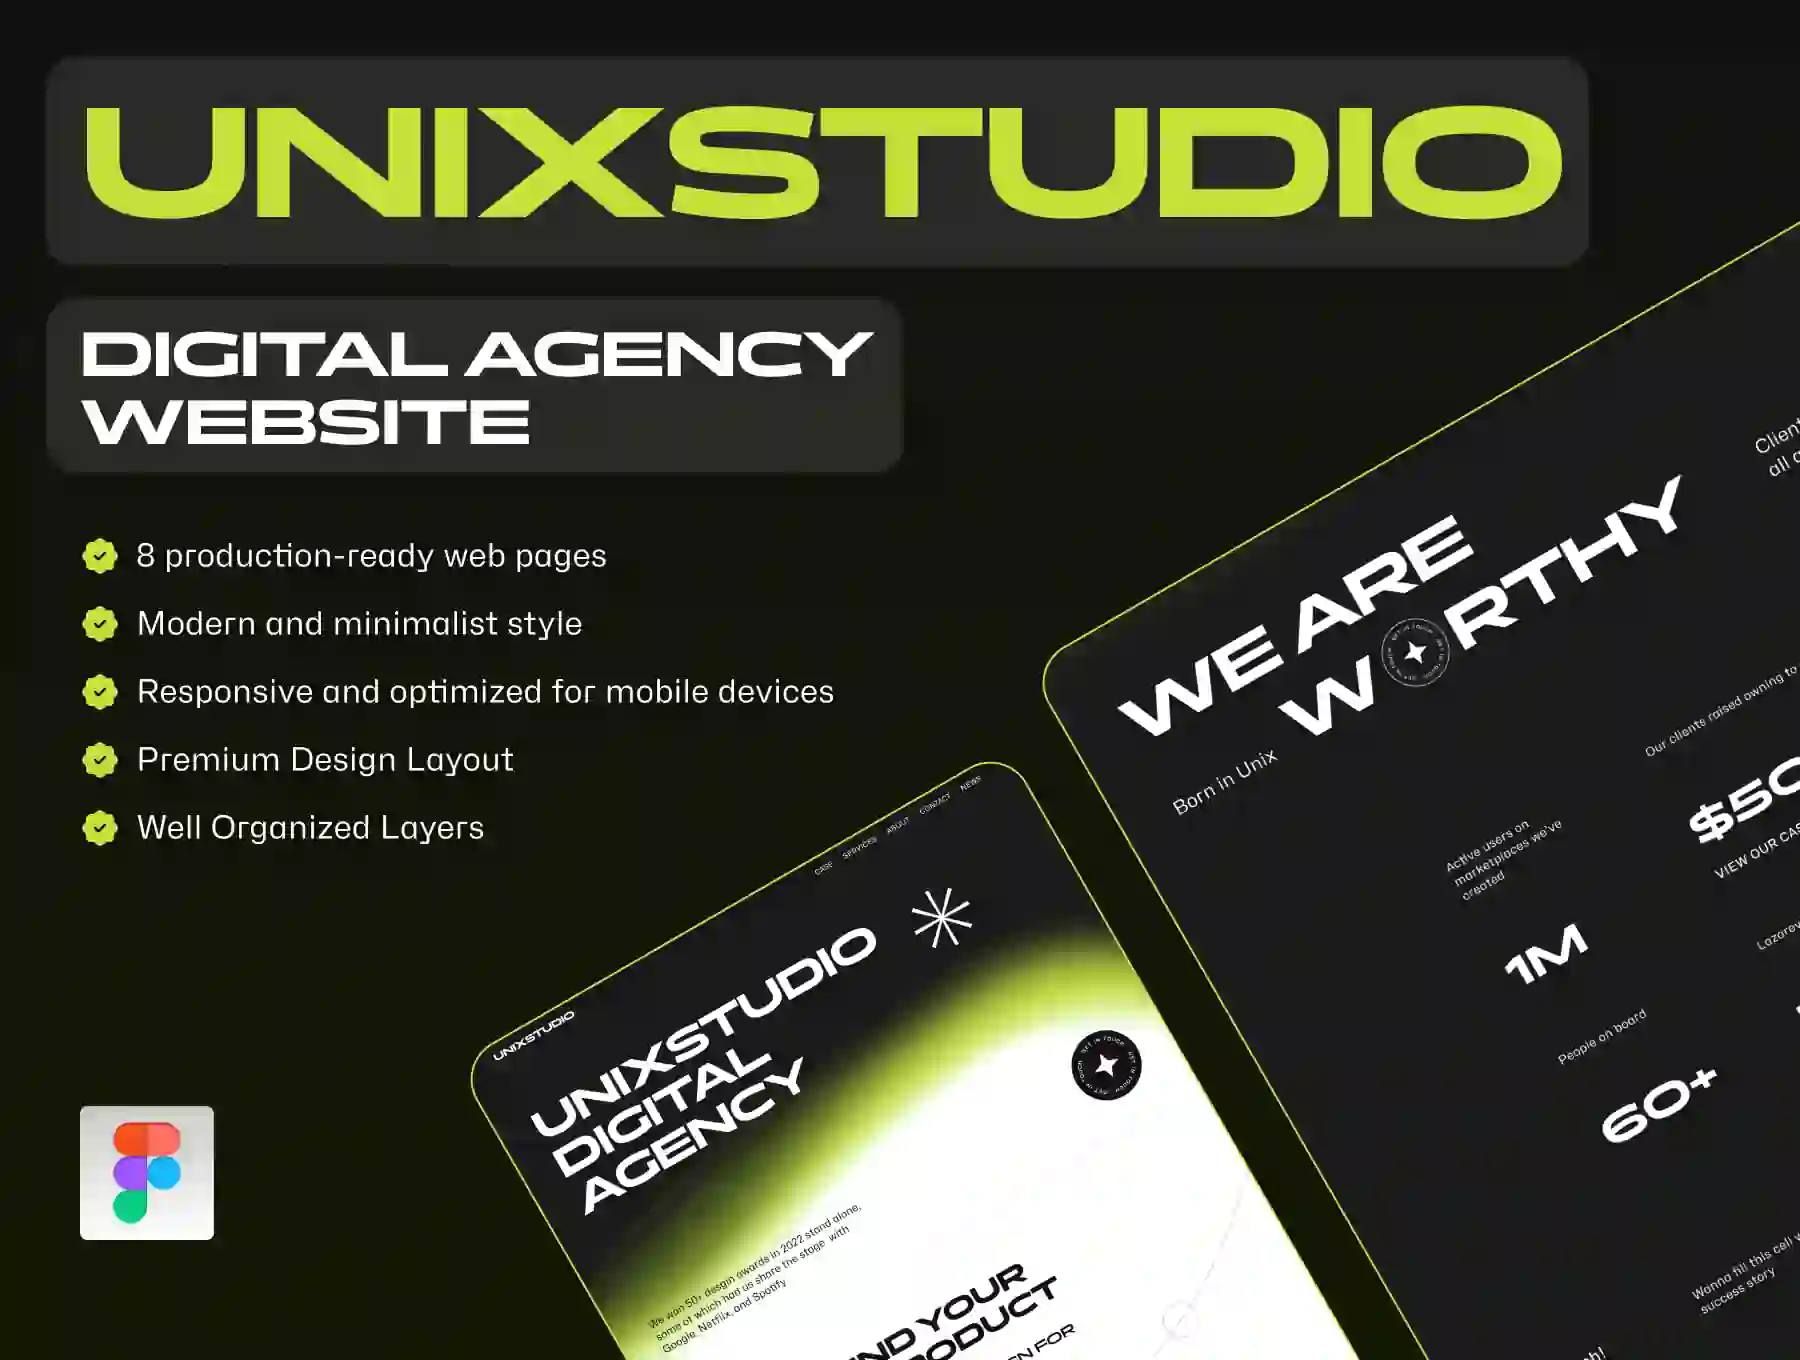 UNIX STUDIO - Digital Agency Website Templates